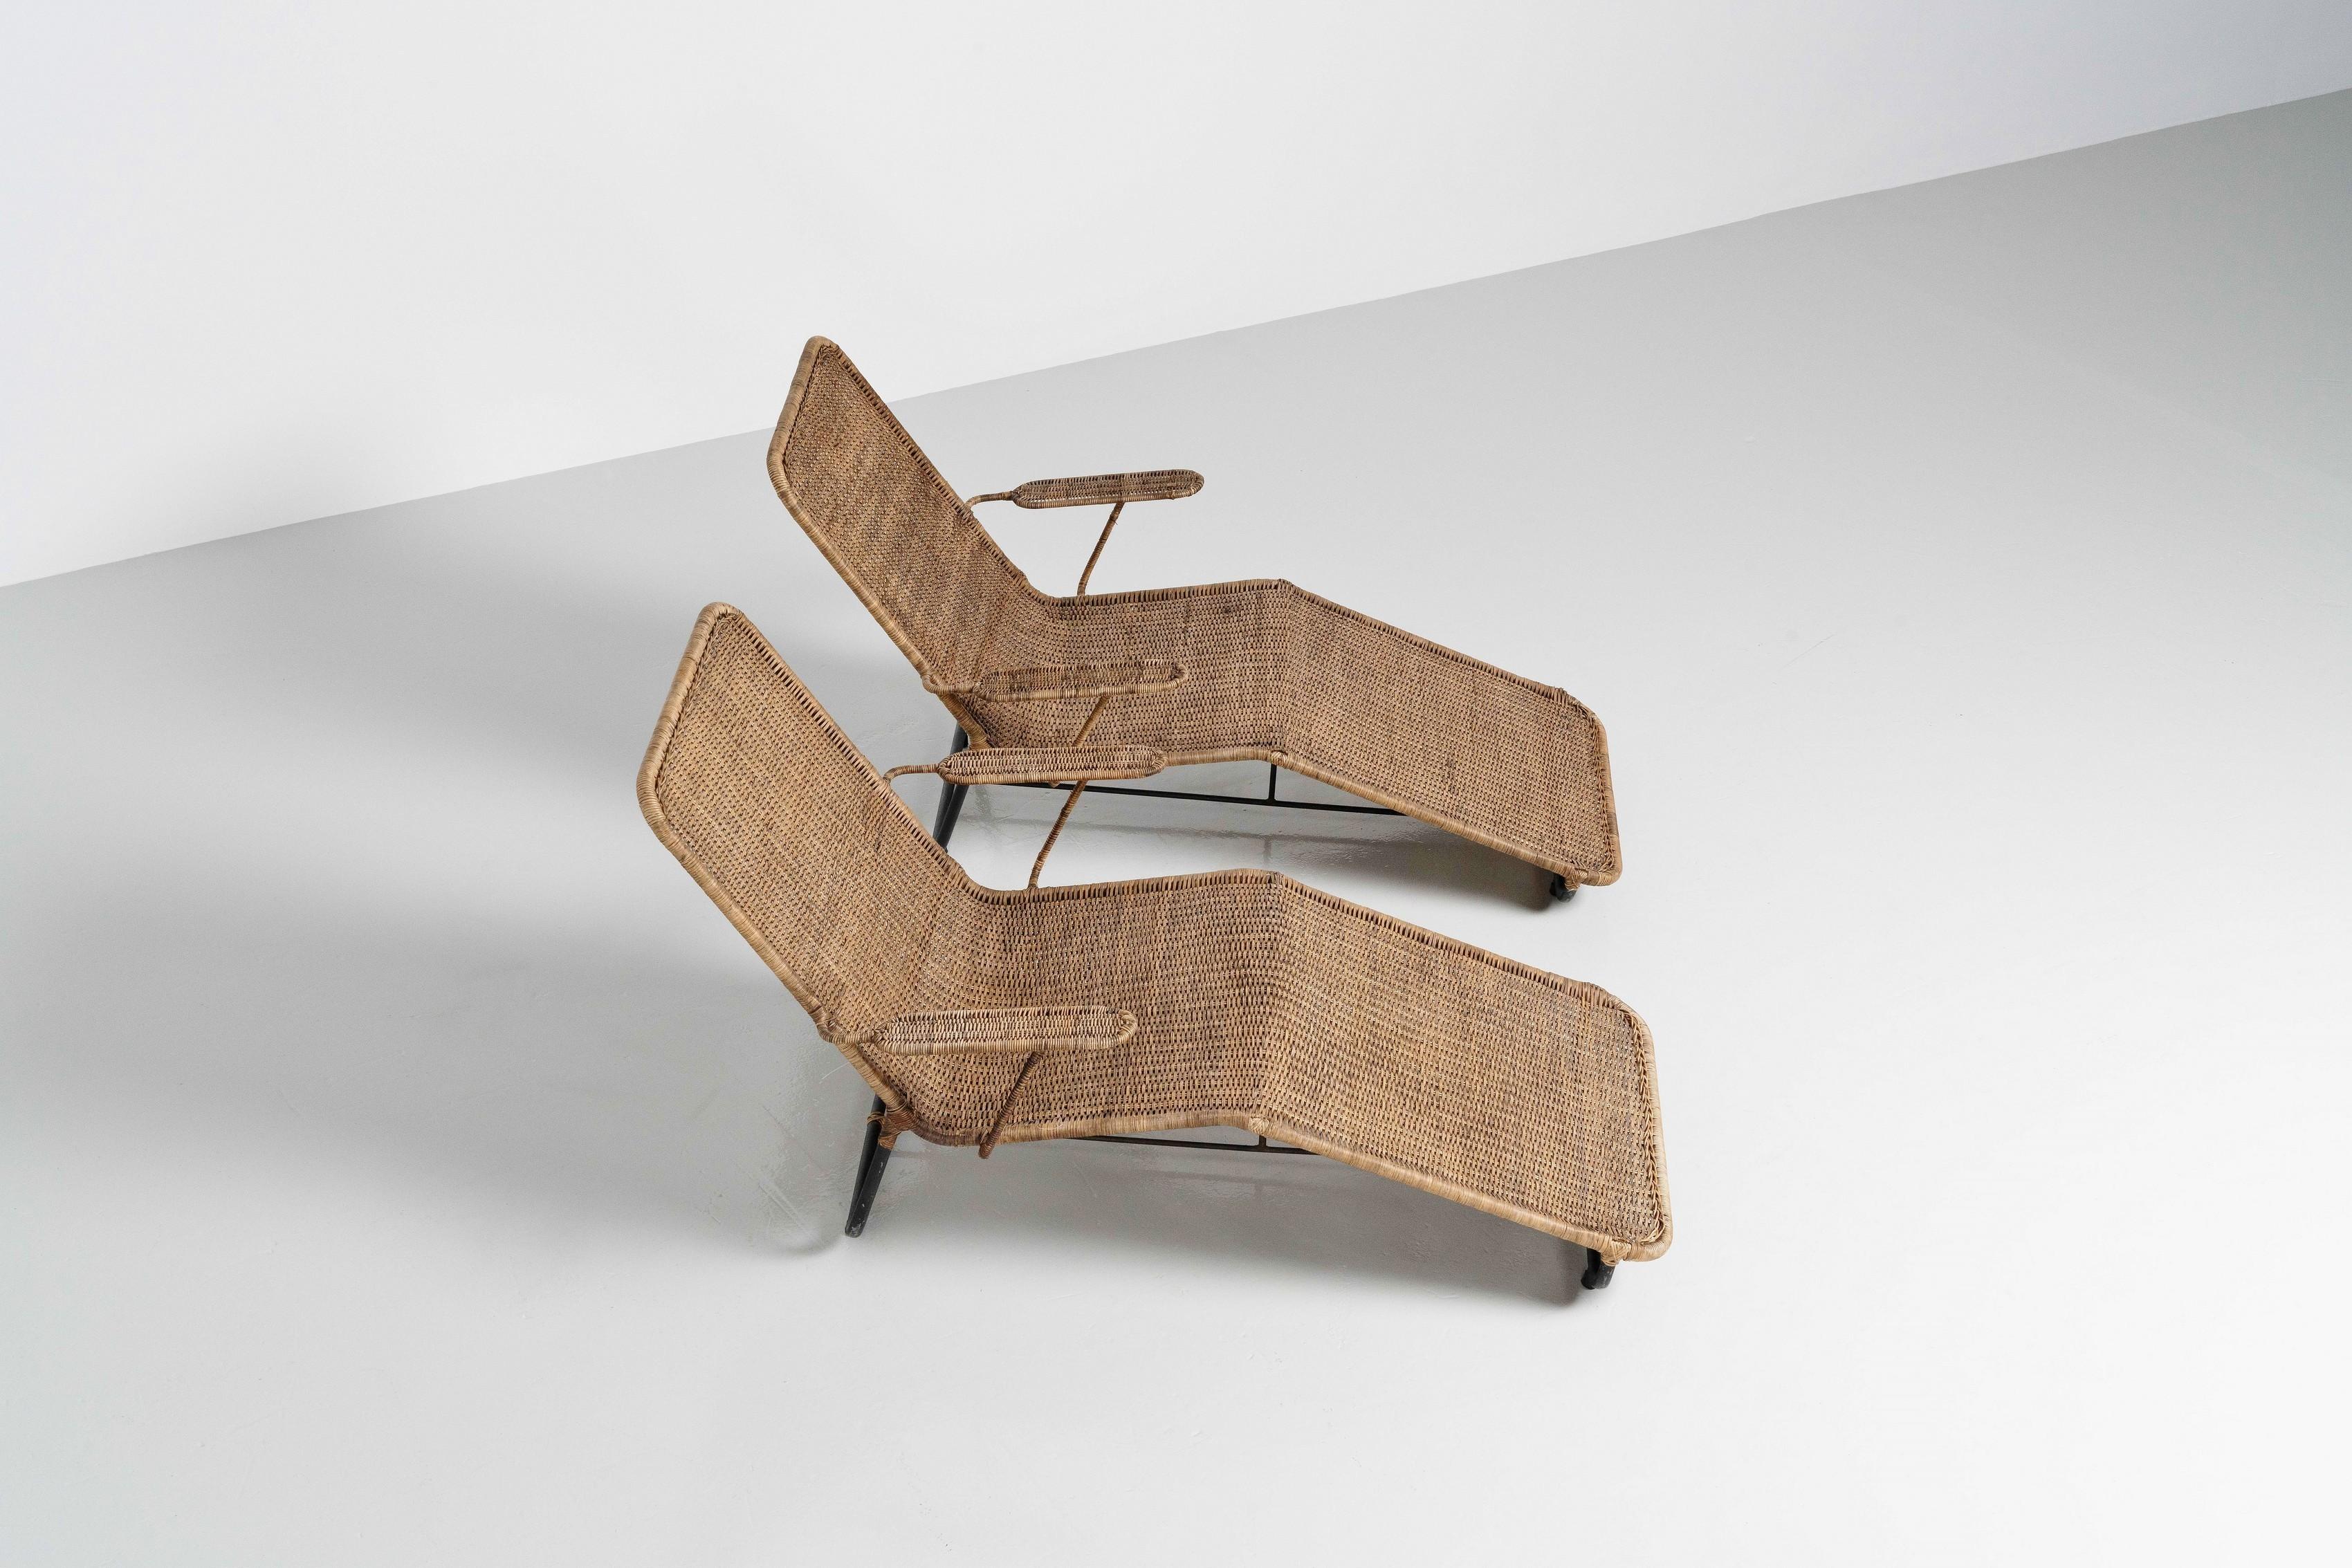 Carlo Hauner and Martin Eisler Rattan Lounge Chairs Brazil 1955 For Sale 2